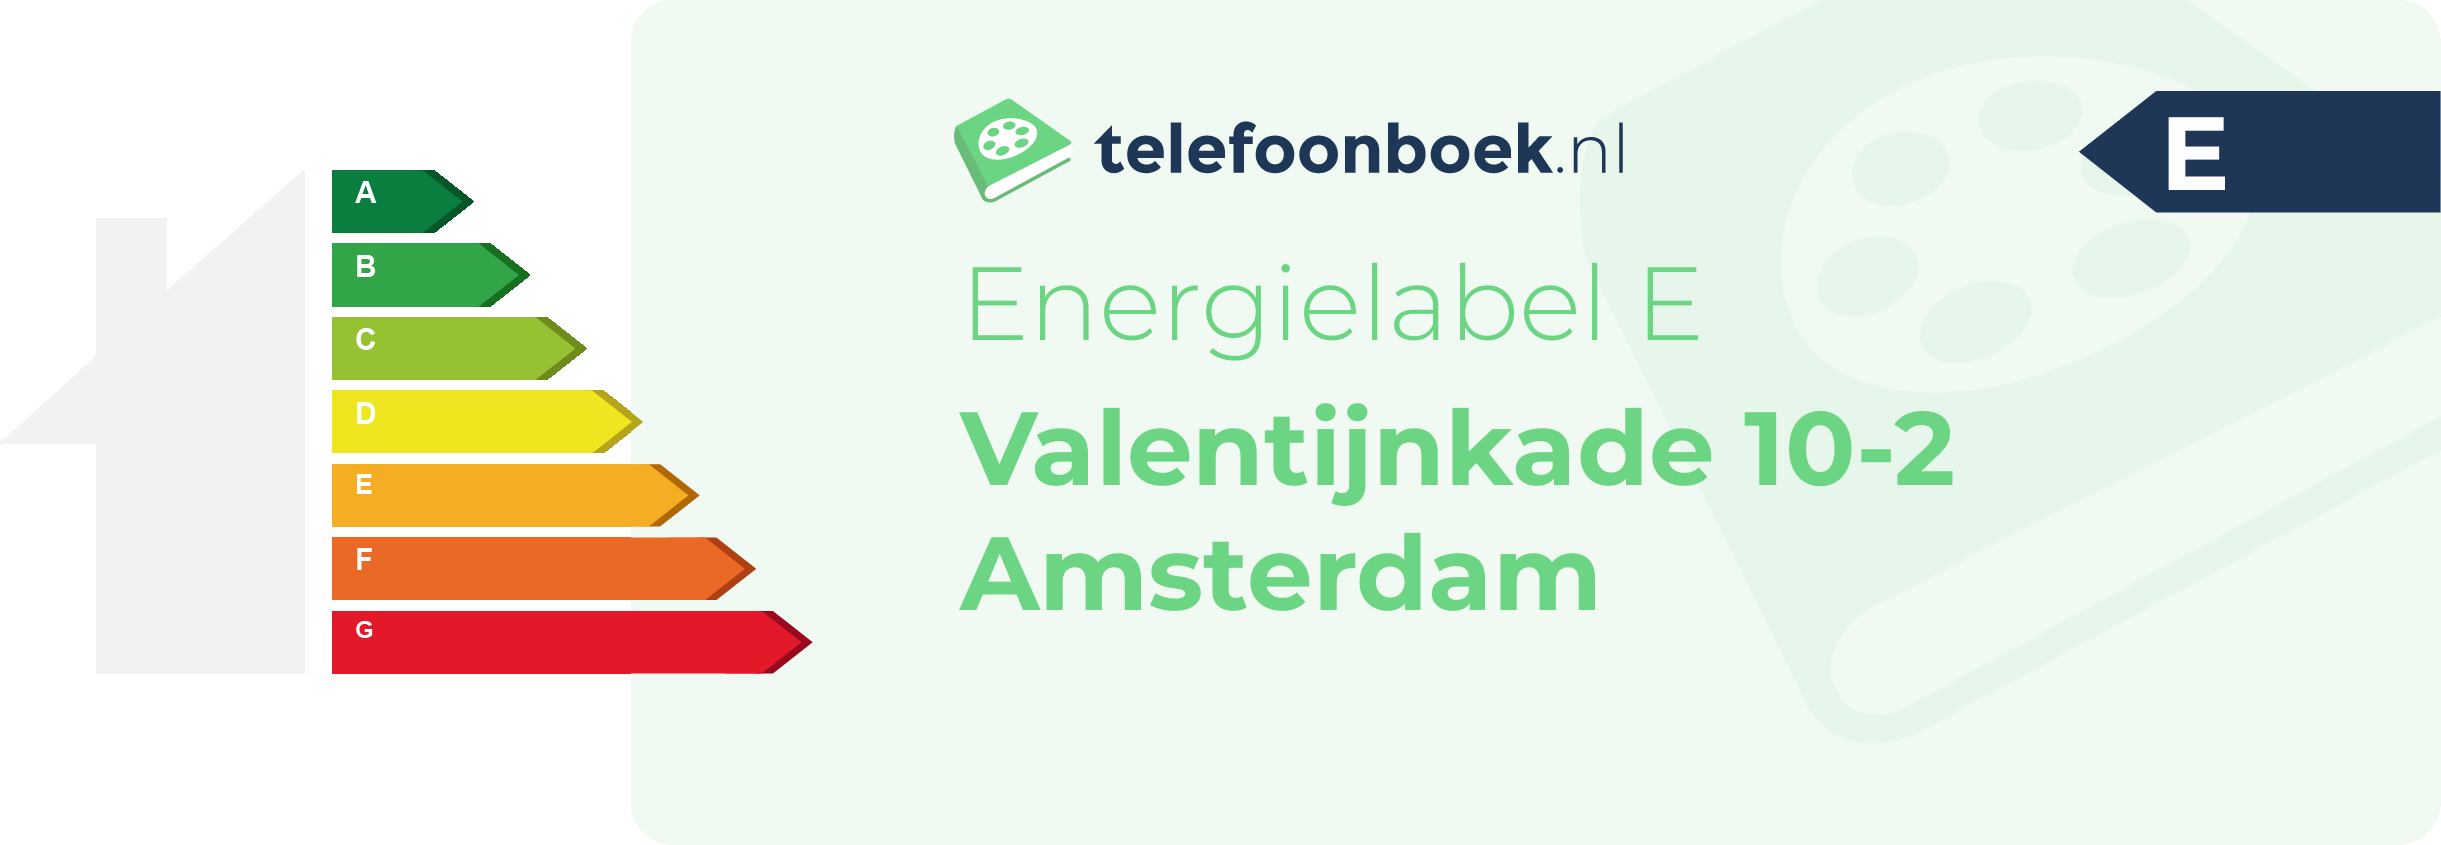 Energielabel Valentijnkade 10-2 Amsterdam